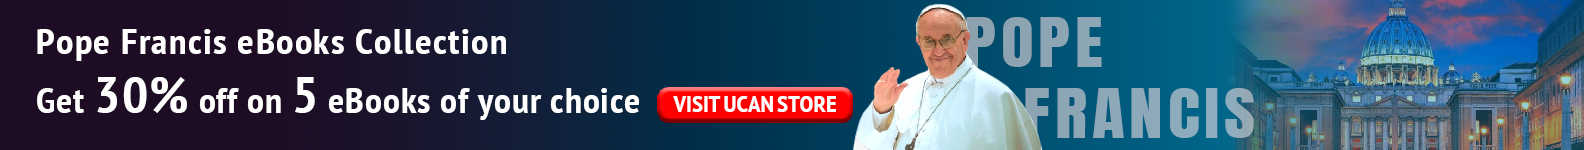 Ucan Store